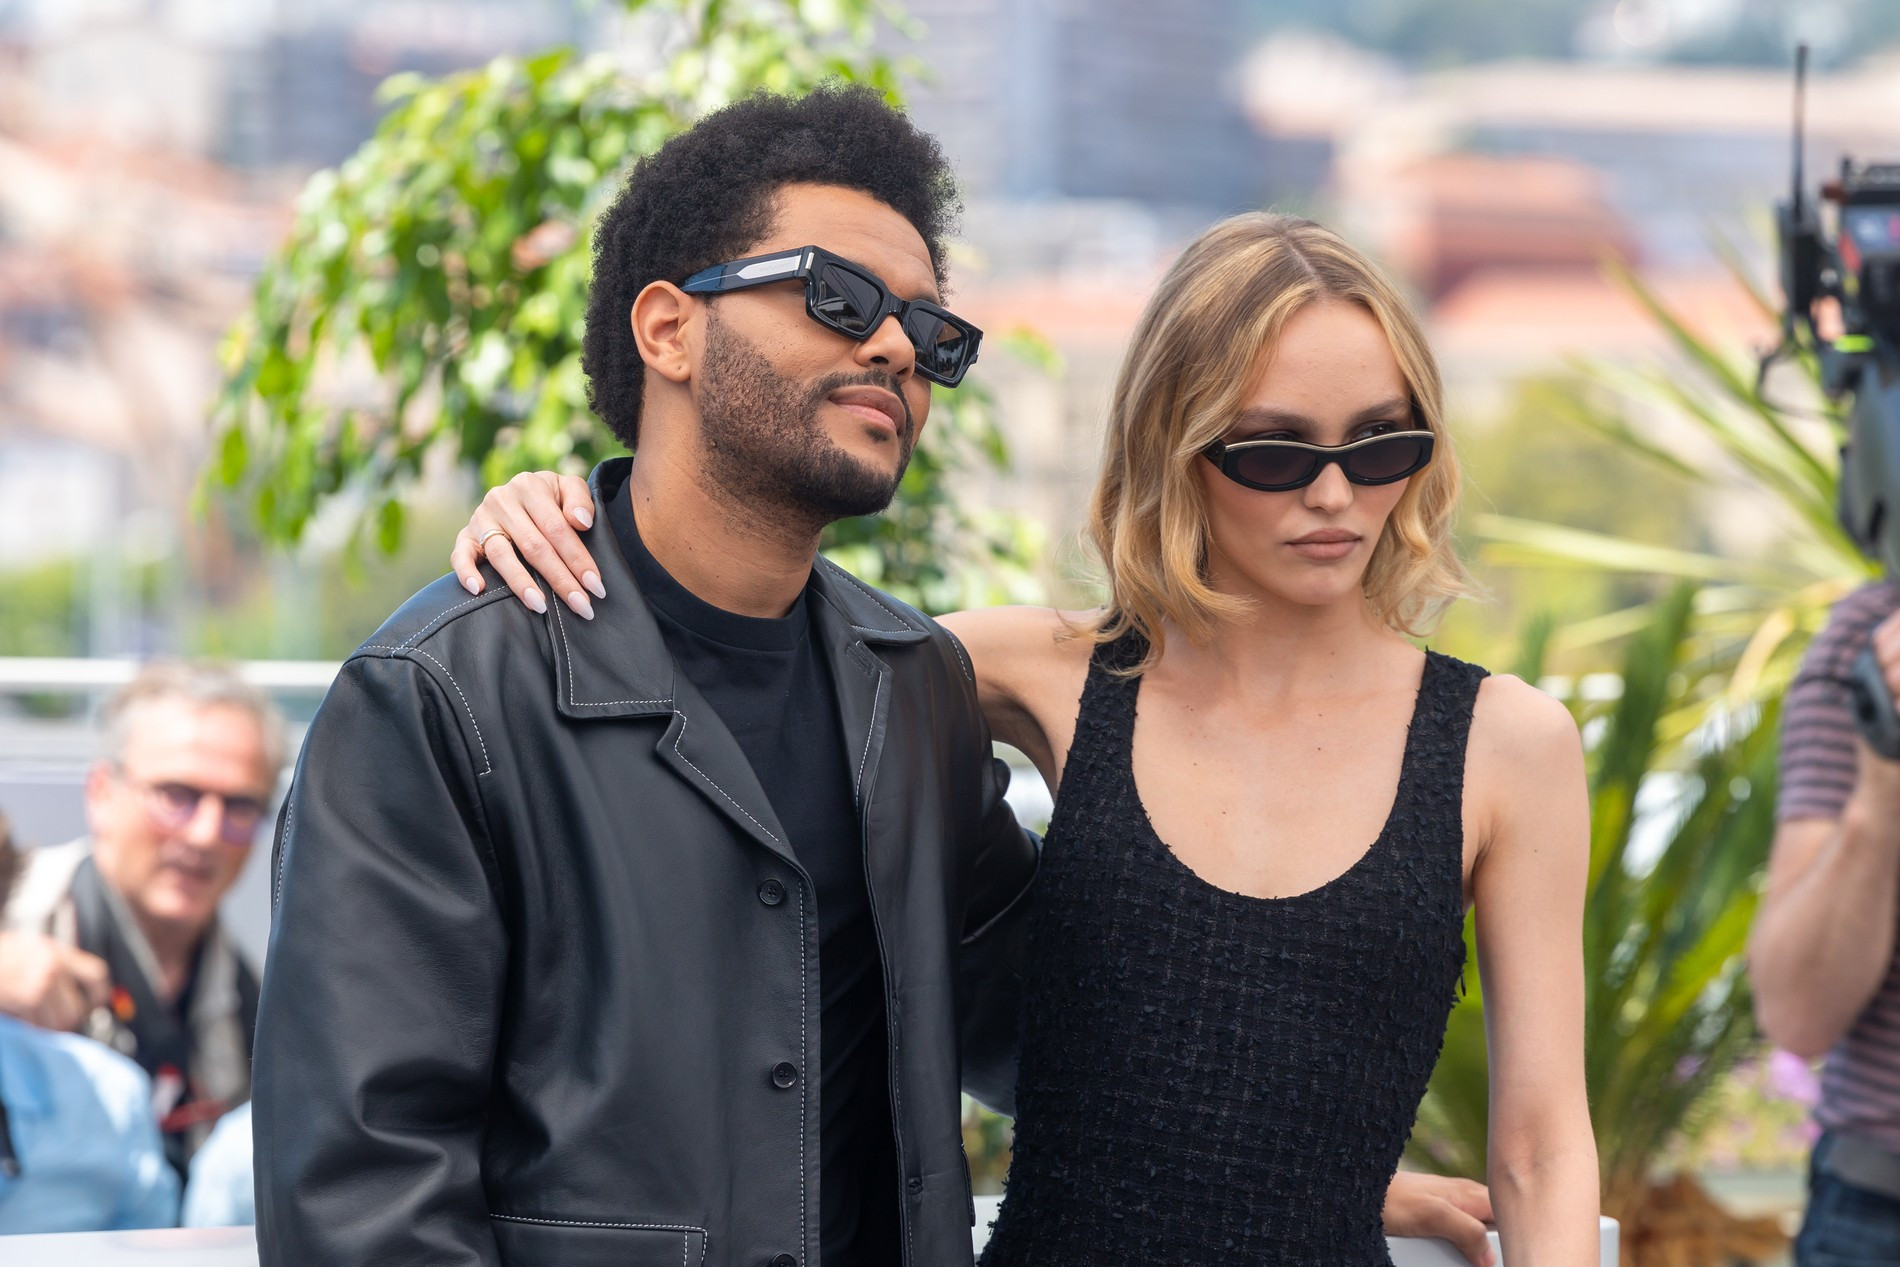 Абель Тесфайе (The Weeknd) и Лили-Роуз Депп на Каннском фестивале
Фото: Getty Images